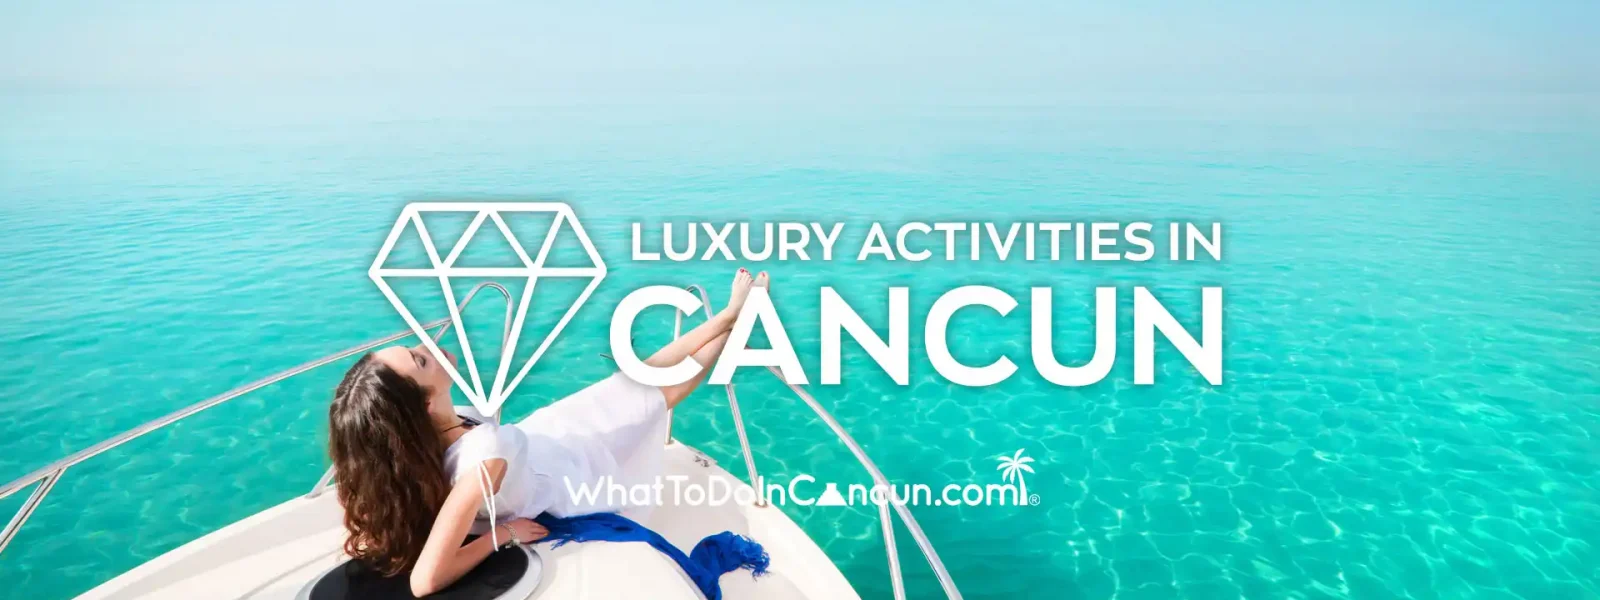 Luxury activities in cancun